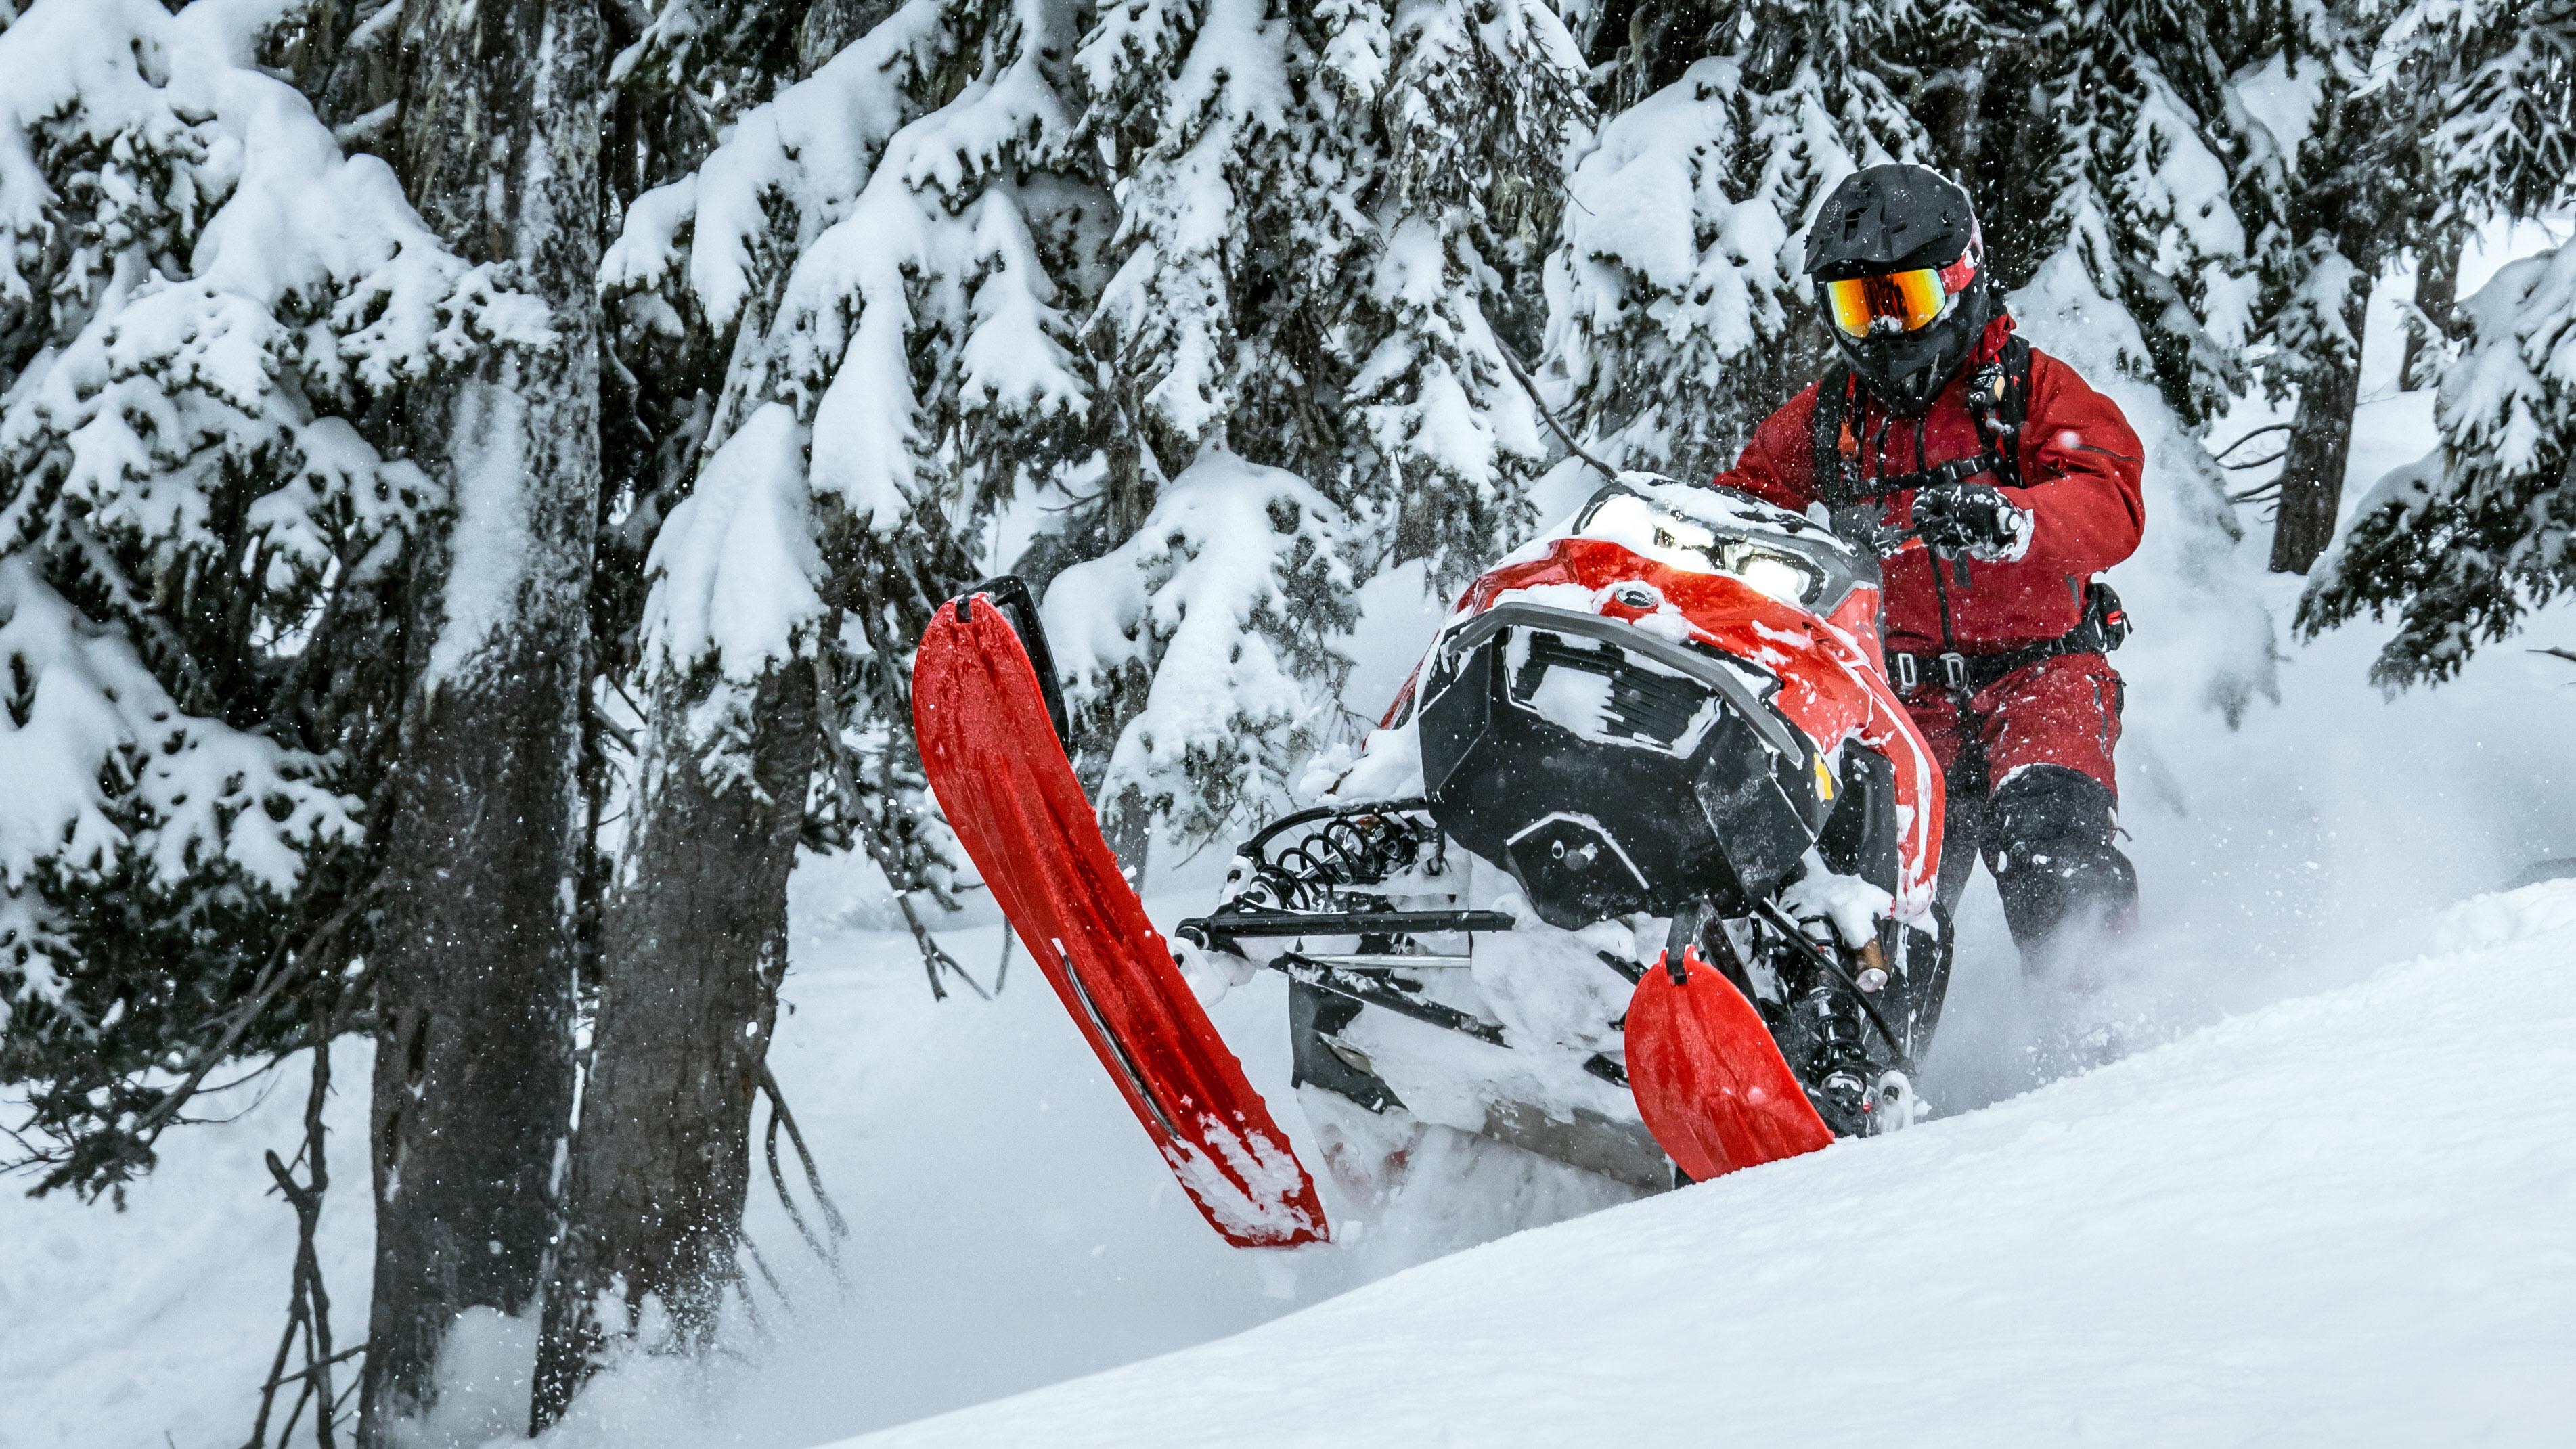 Lynx Quantum geared rider riding in deep snow wih Shredder